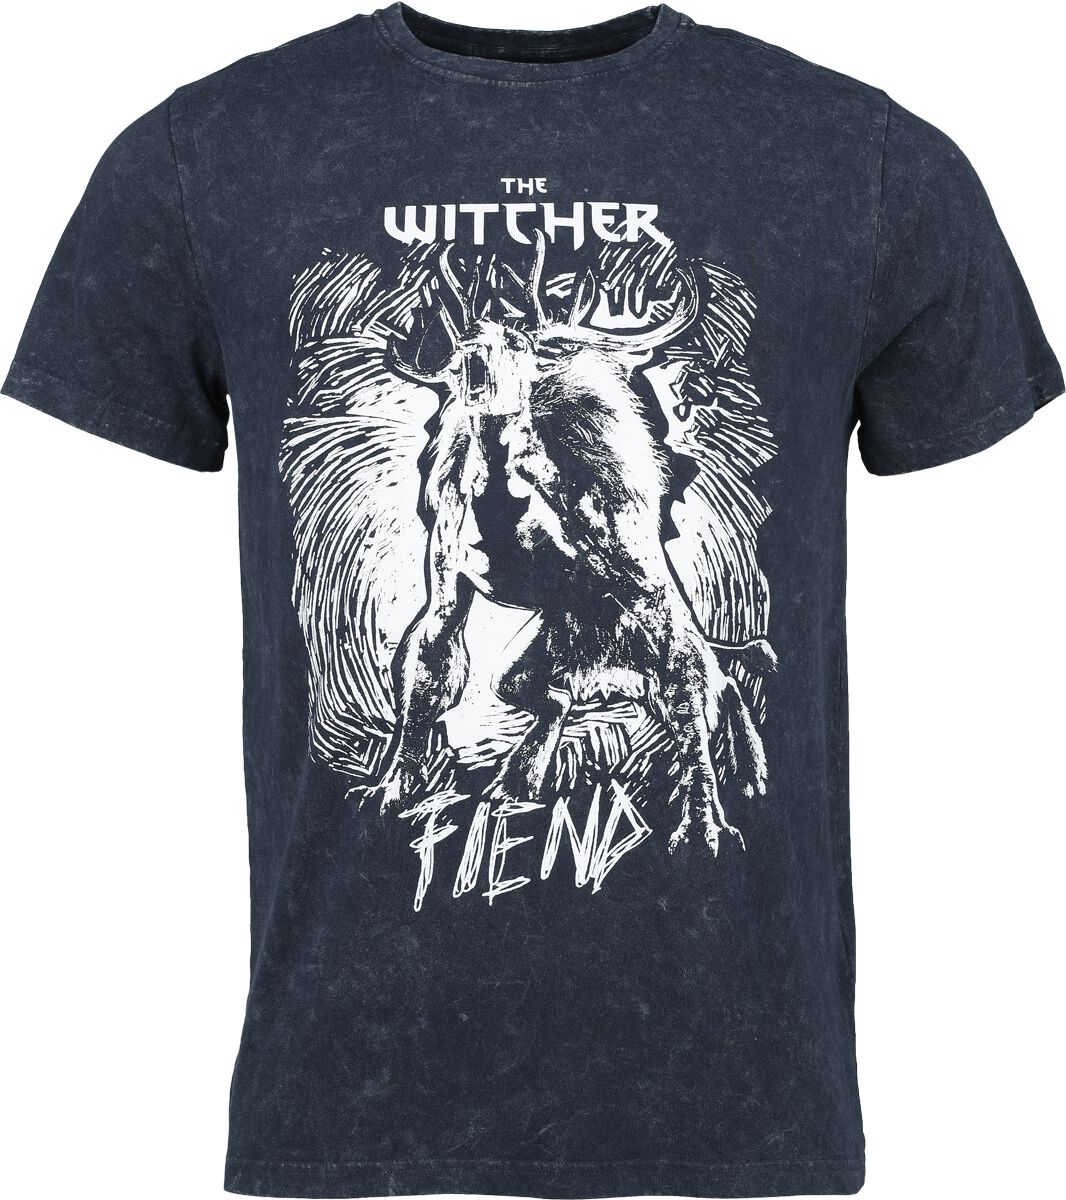 The Witcher Fiend T-Shirt blau in M